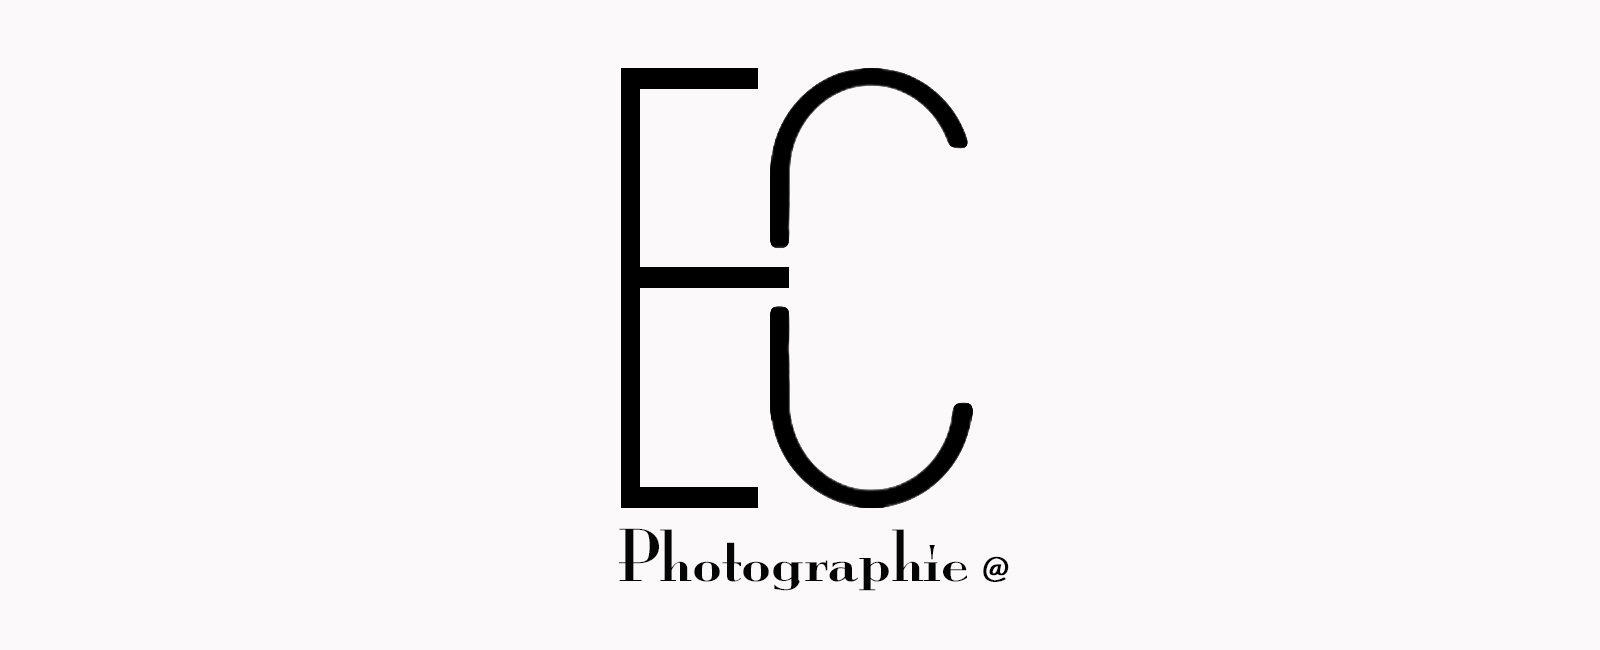 EC Photographie